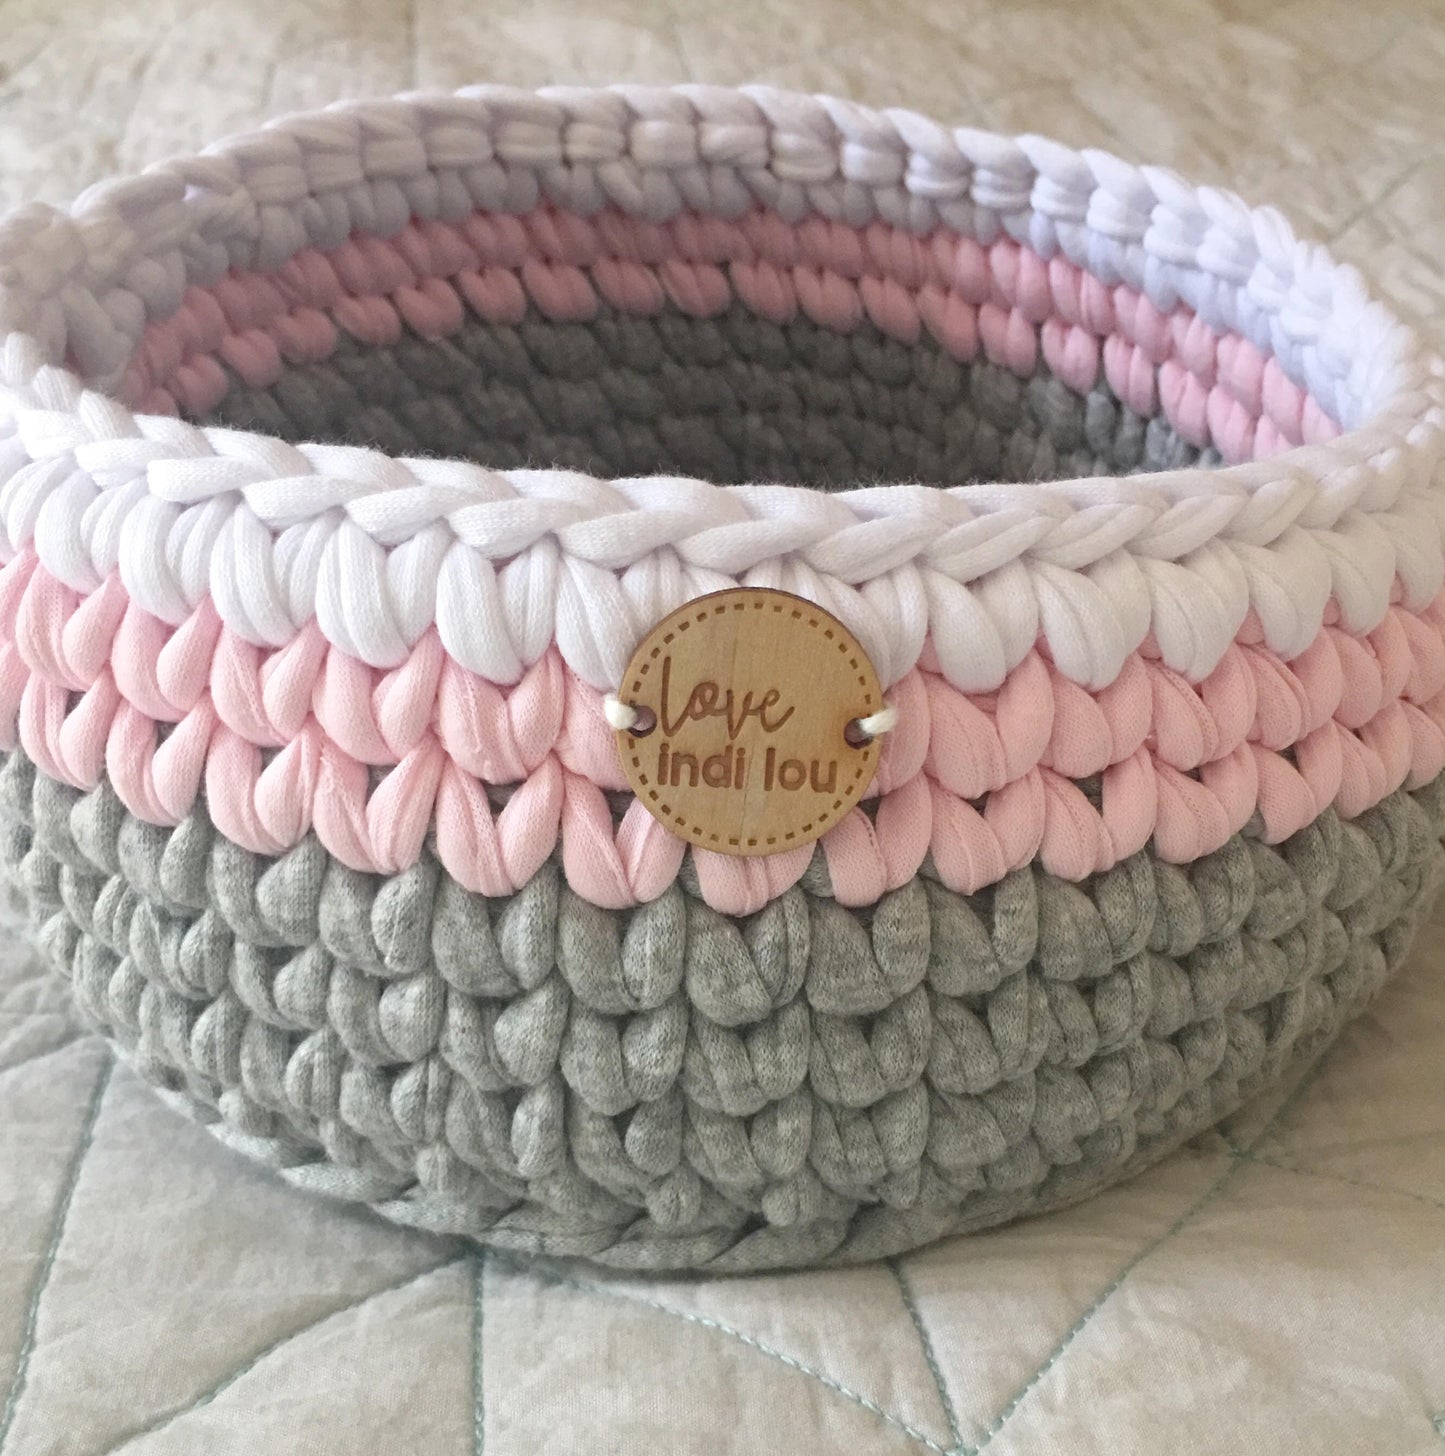 Crochet Storage Basket - Blush Pink, Grey + White